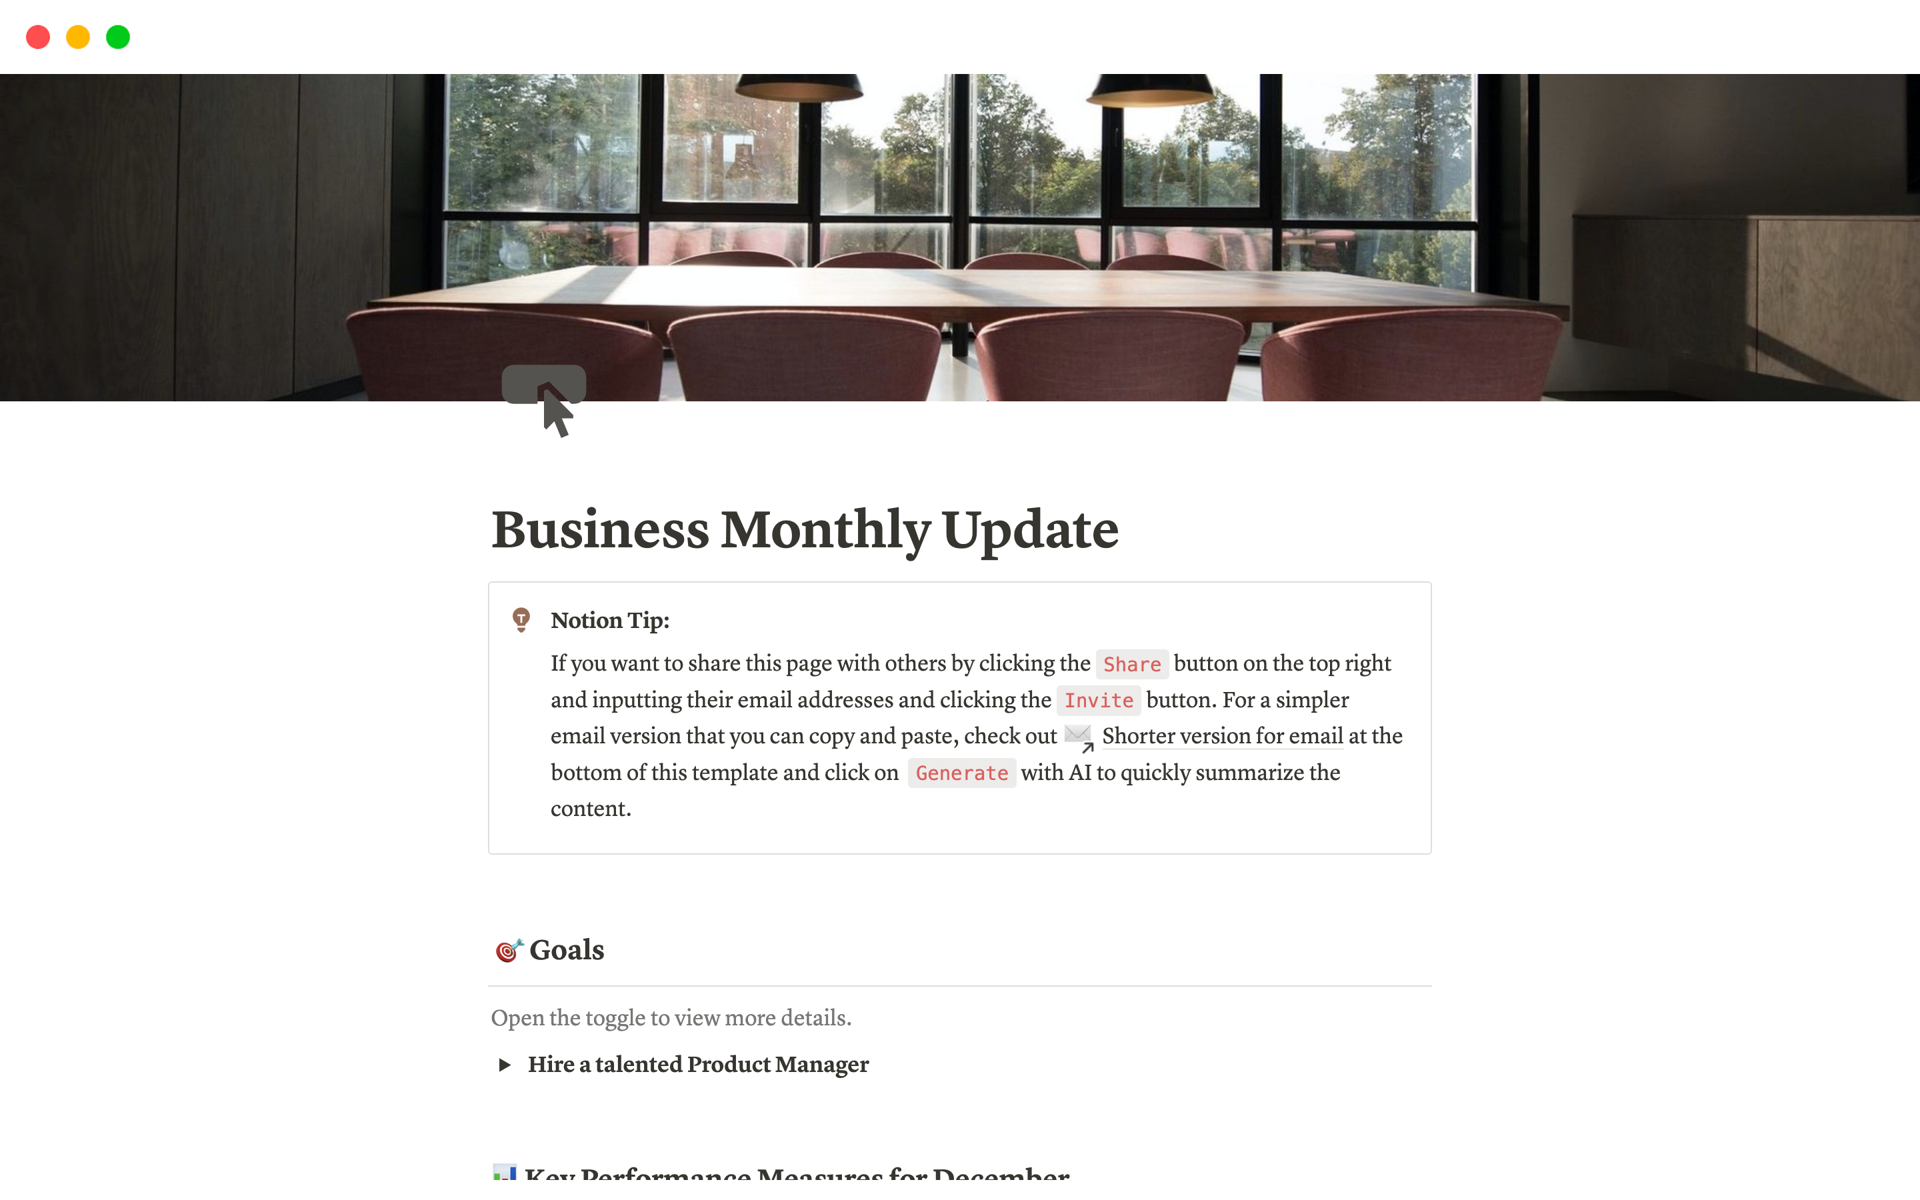 Vista previa de una plantilla para Business Monthly Update